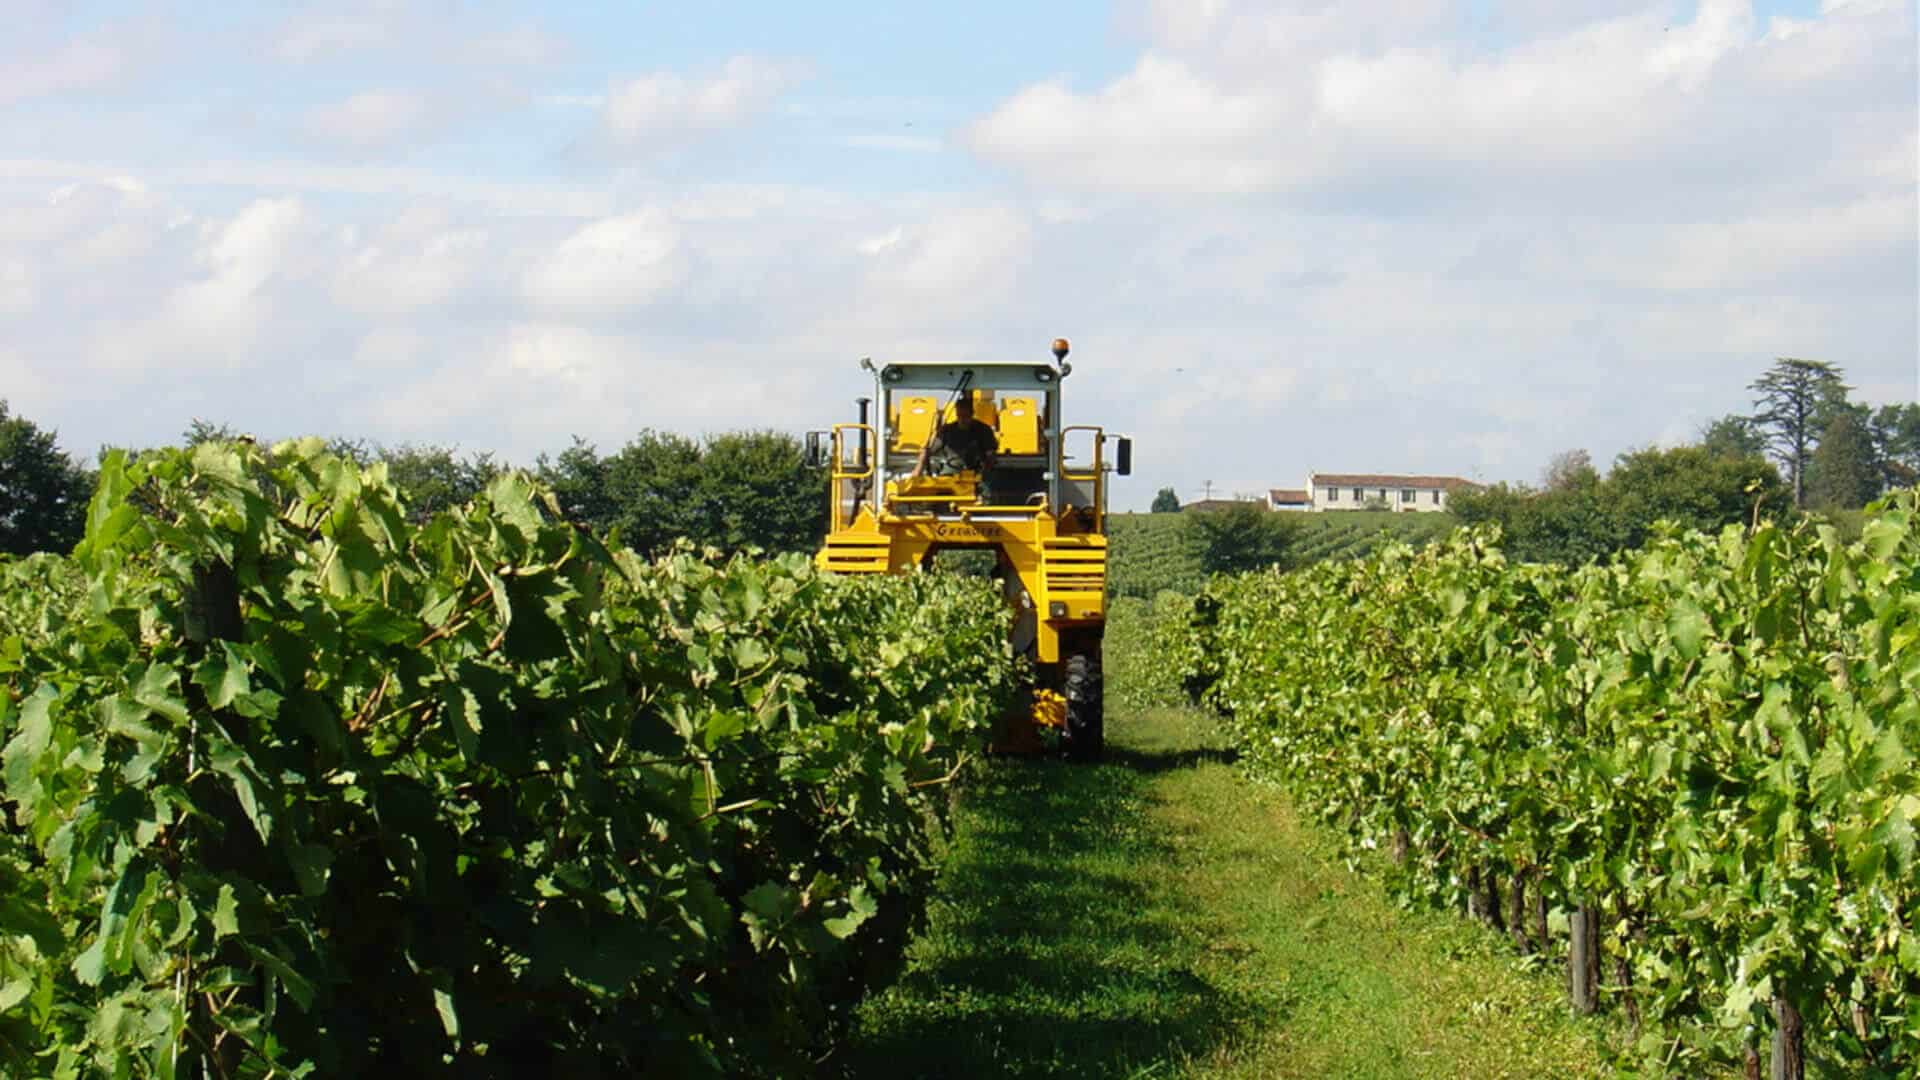 Harvesting machine in action in the cognac vineyard